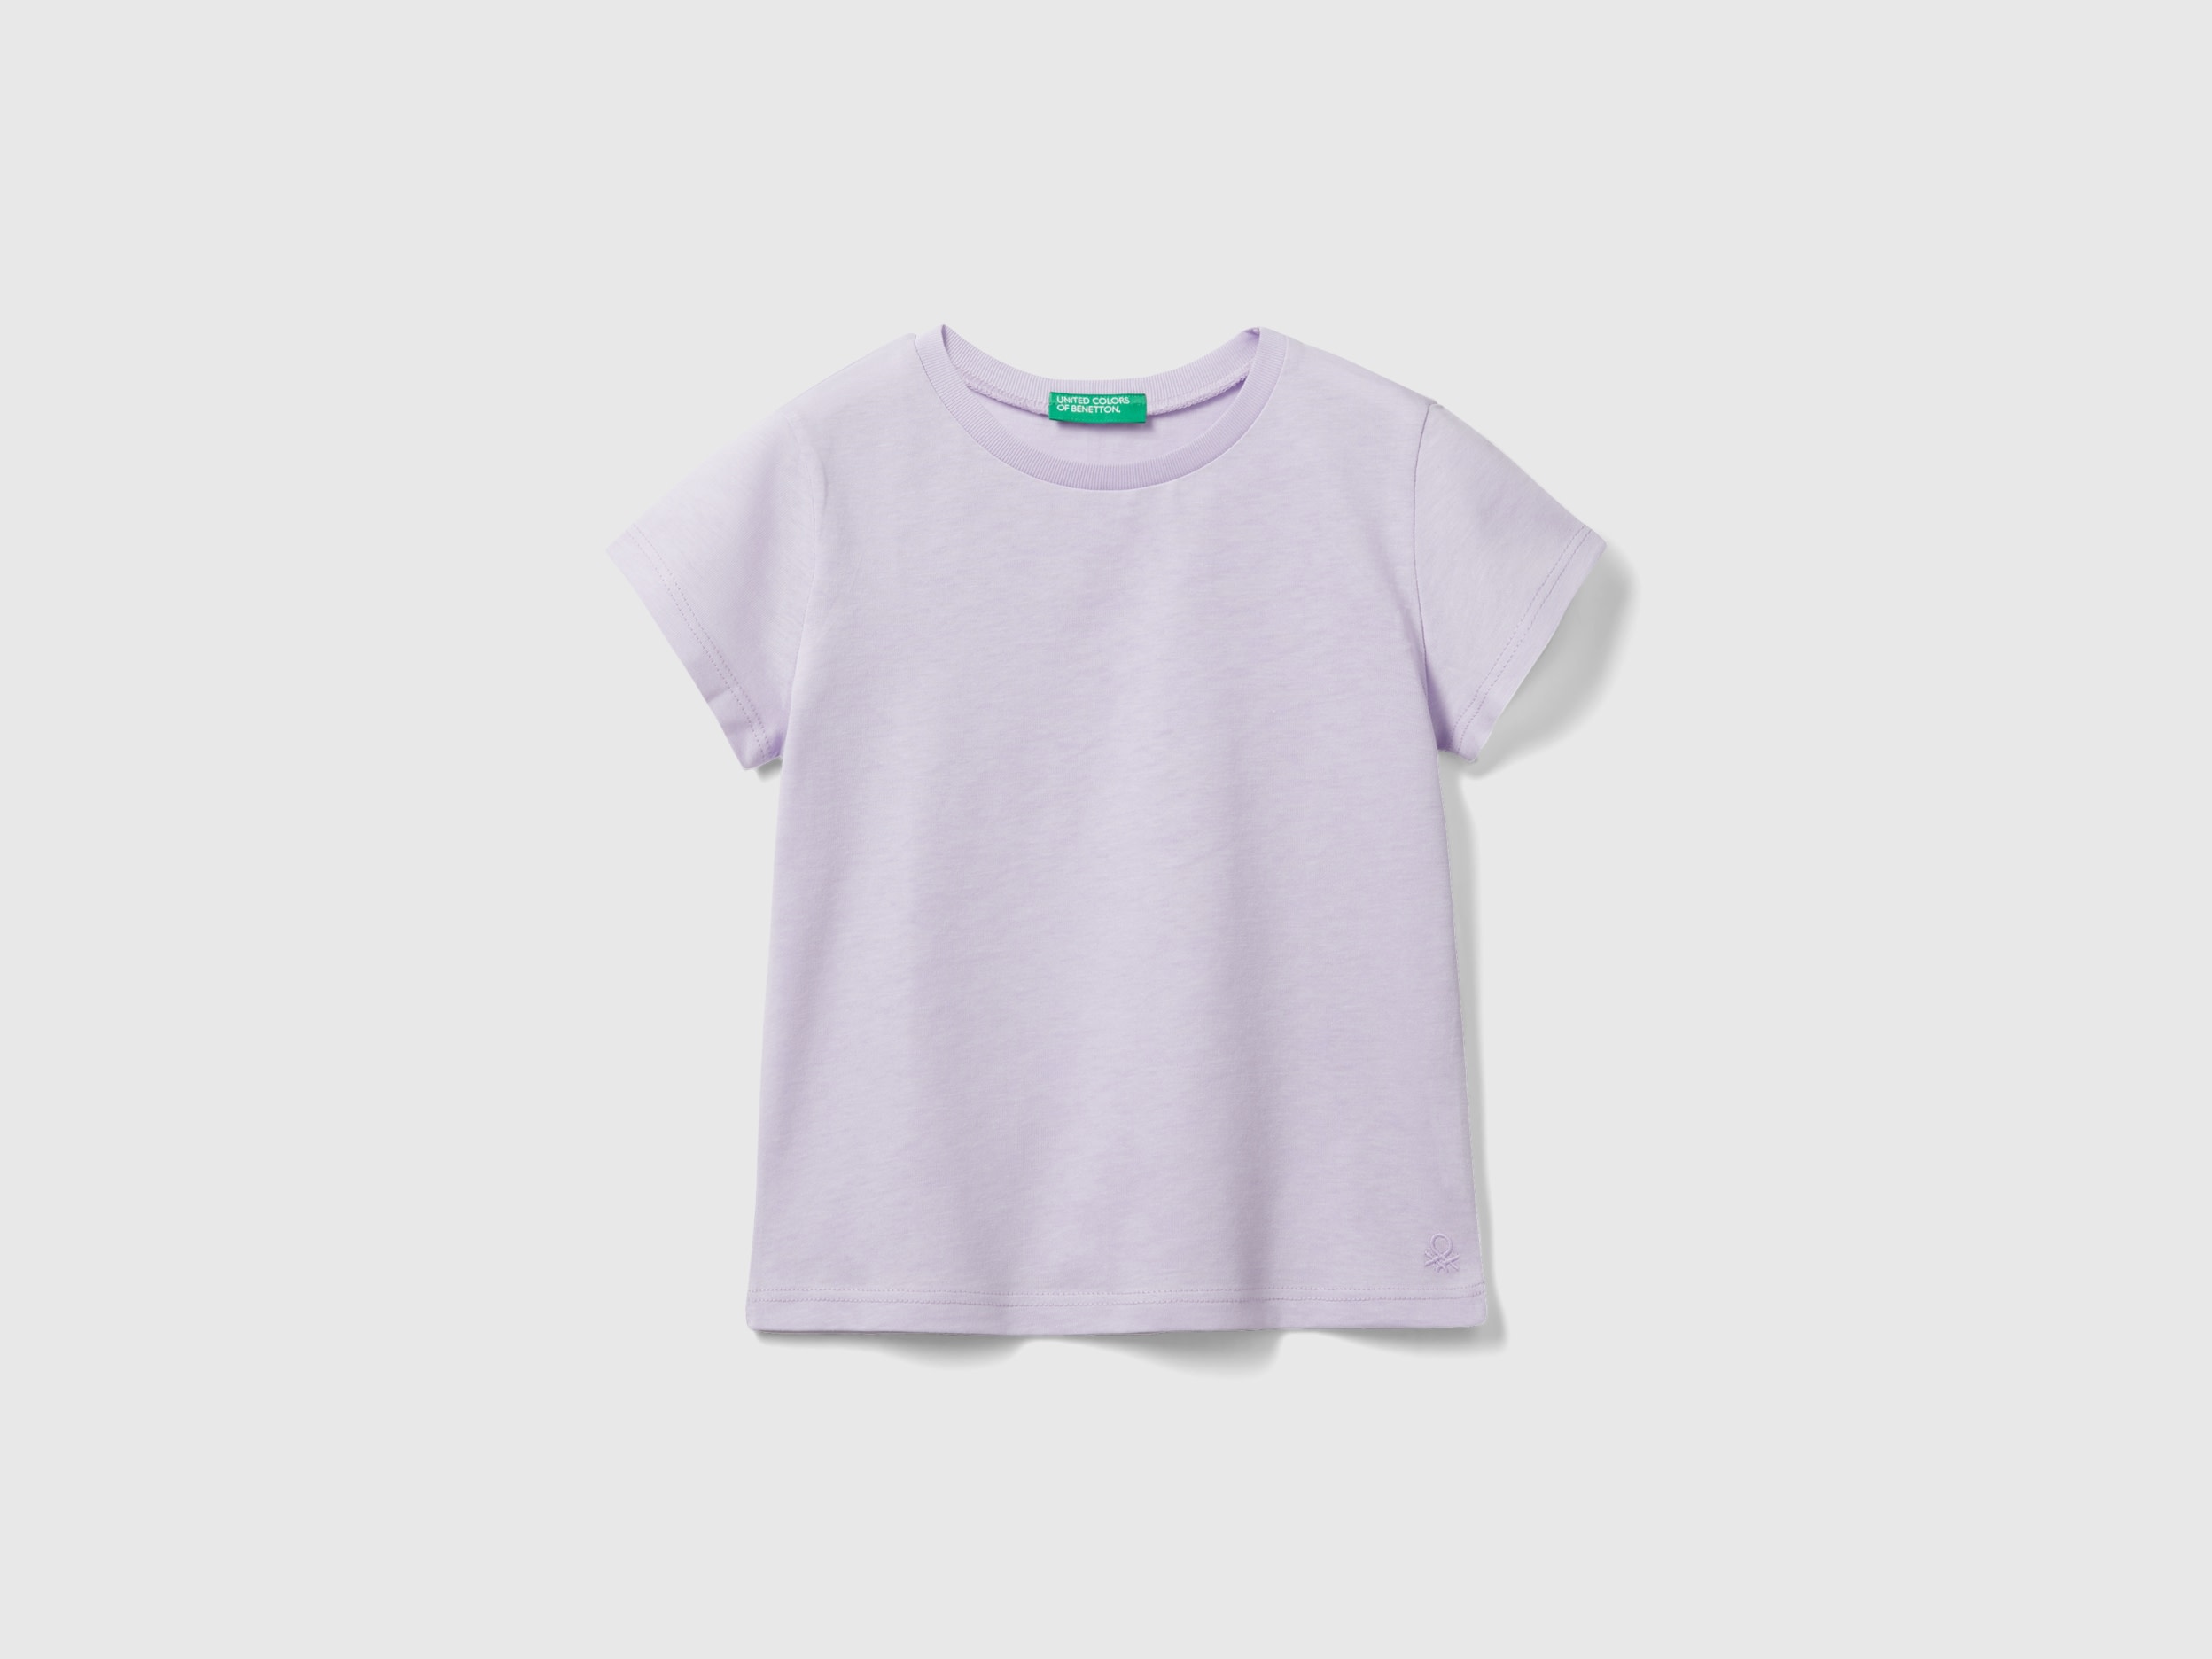 Image of Benetton, 100% Organic Cotton T-shirt, size 90, Lilac, Kids